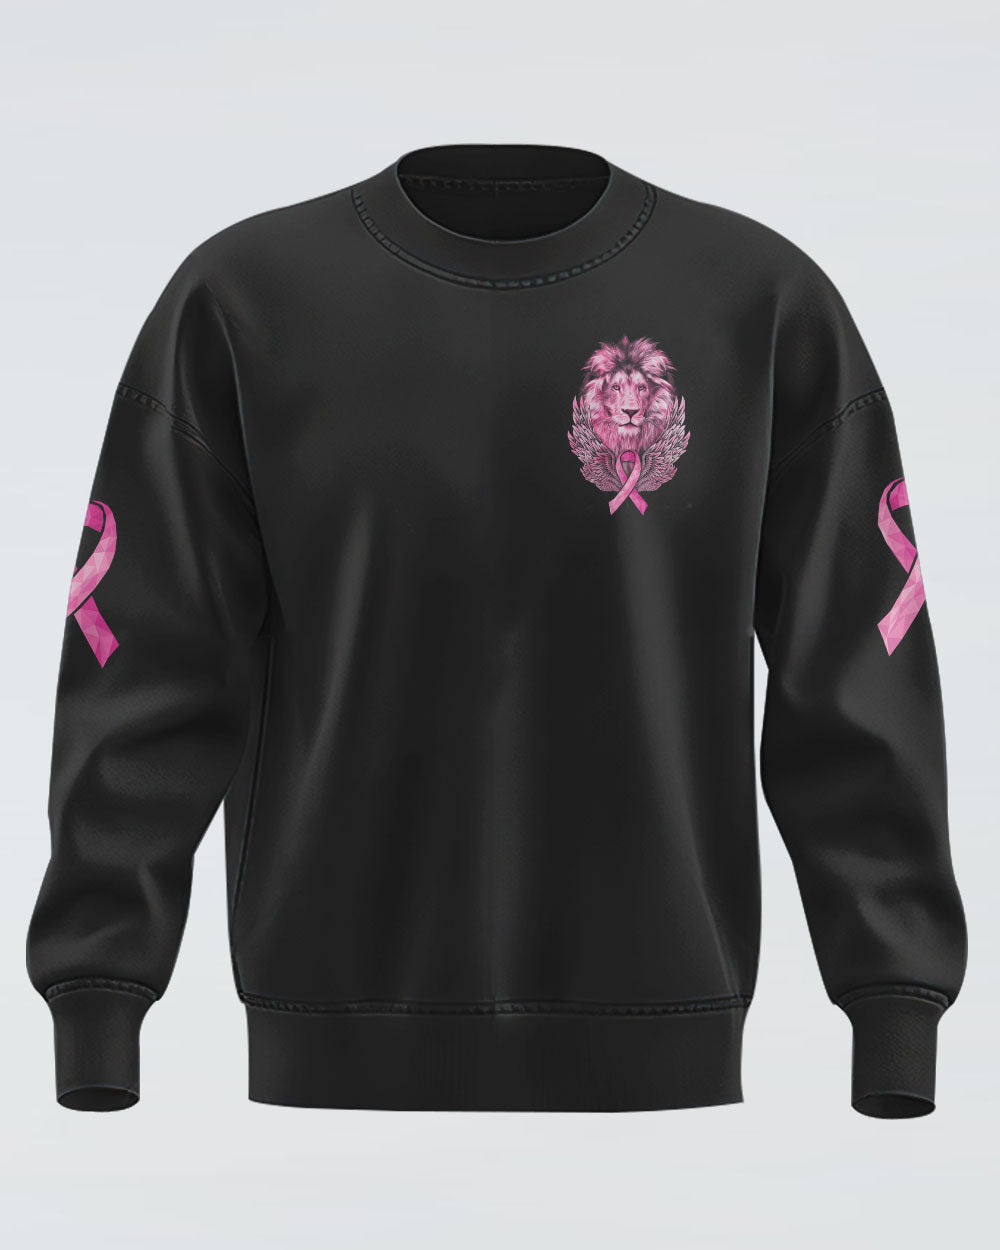 Don't Judge Lion Wings Pink Ribbon Women's Breast Cancer Awareness Sweatshirt